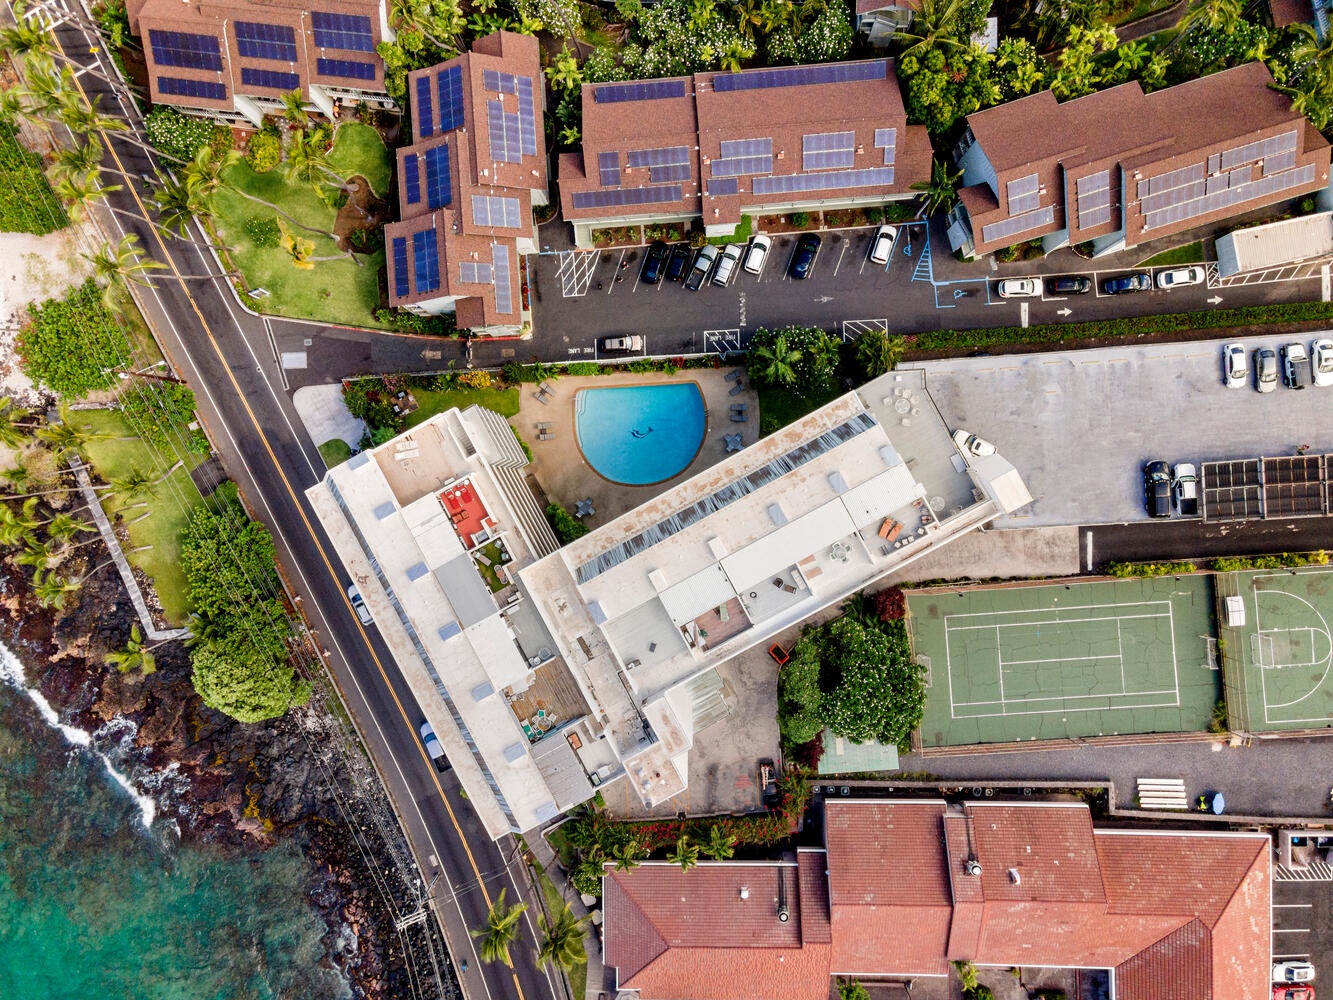 Kailua Kona Vacation Rentals, Kona Alii 302 - Aerial shot of the the complex.